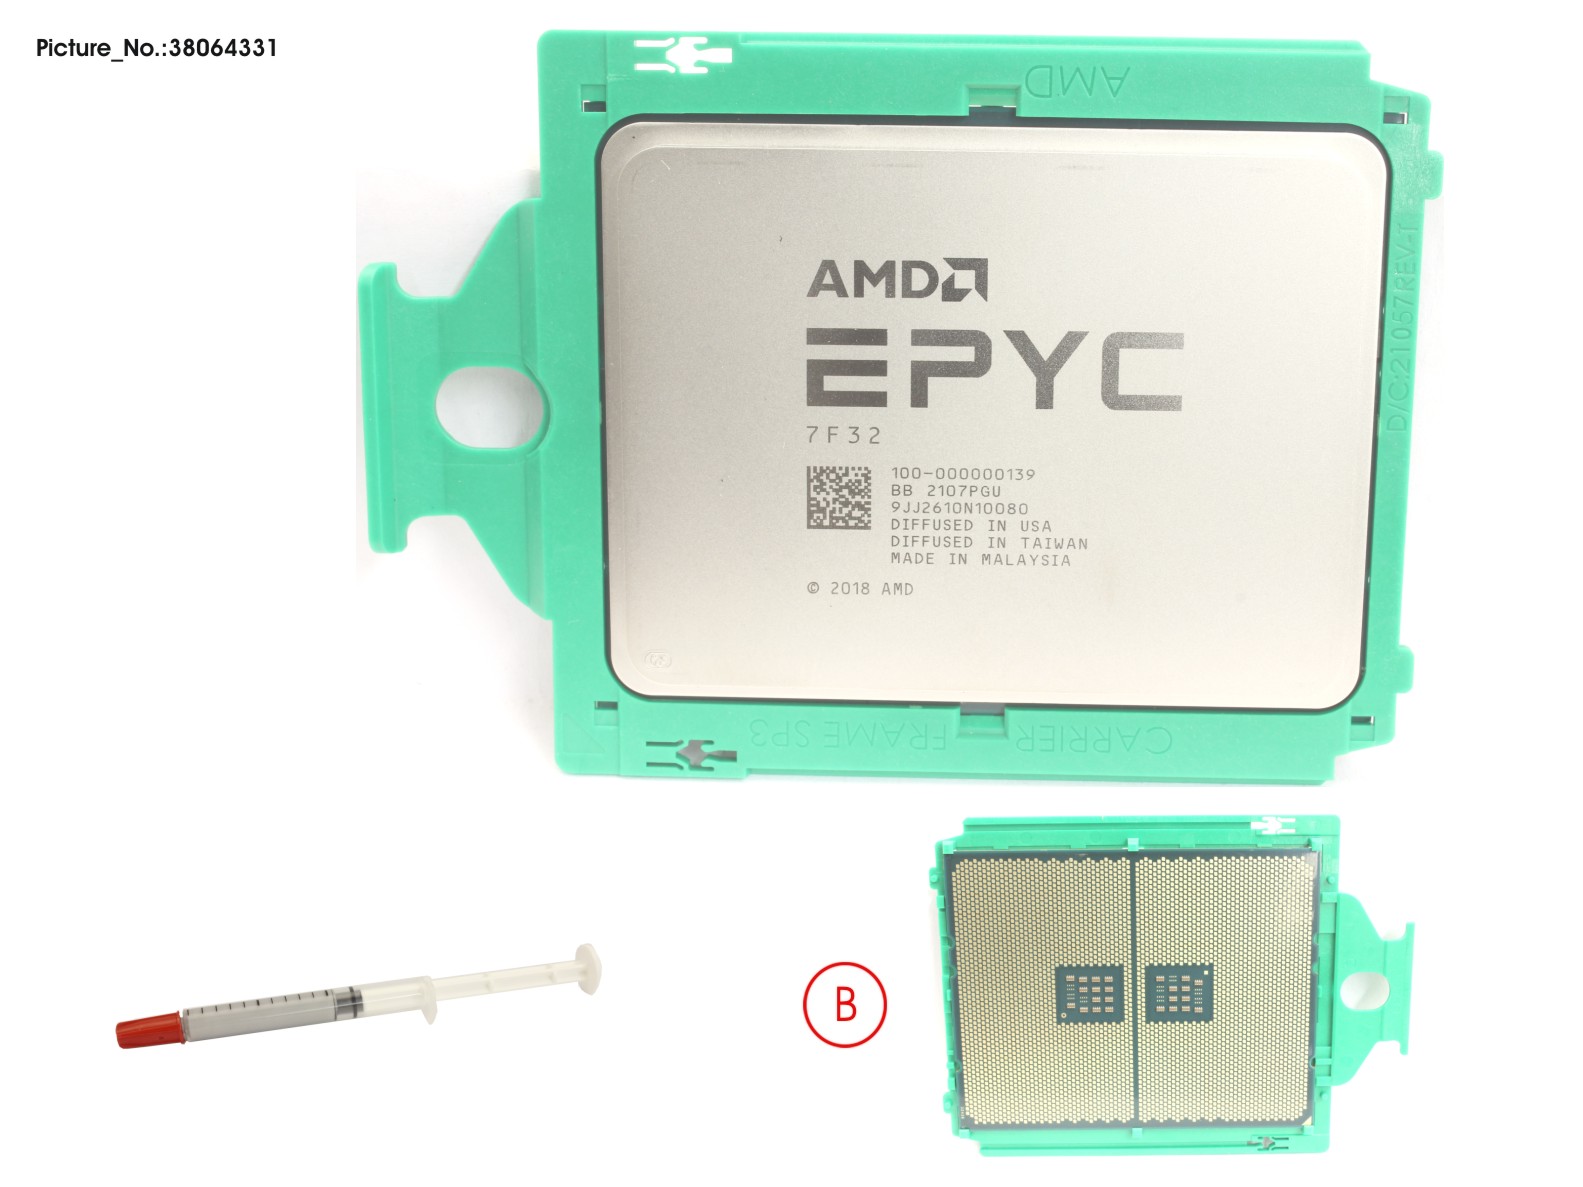 CPU SPARE AMD EPYC 7F32